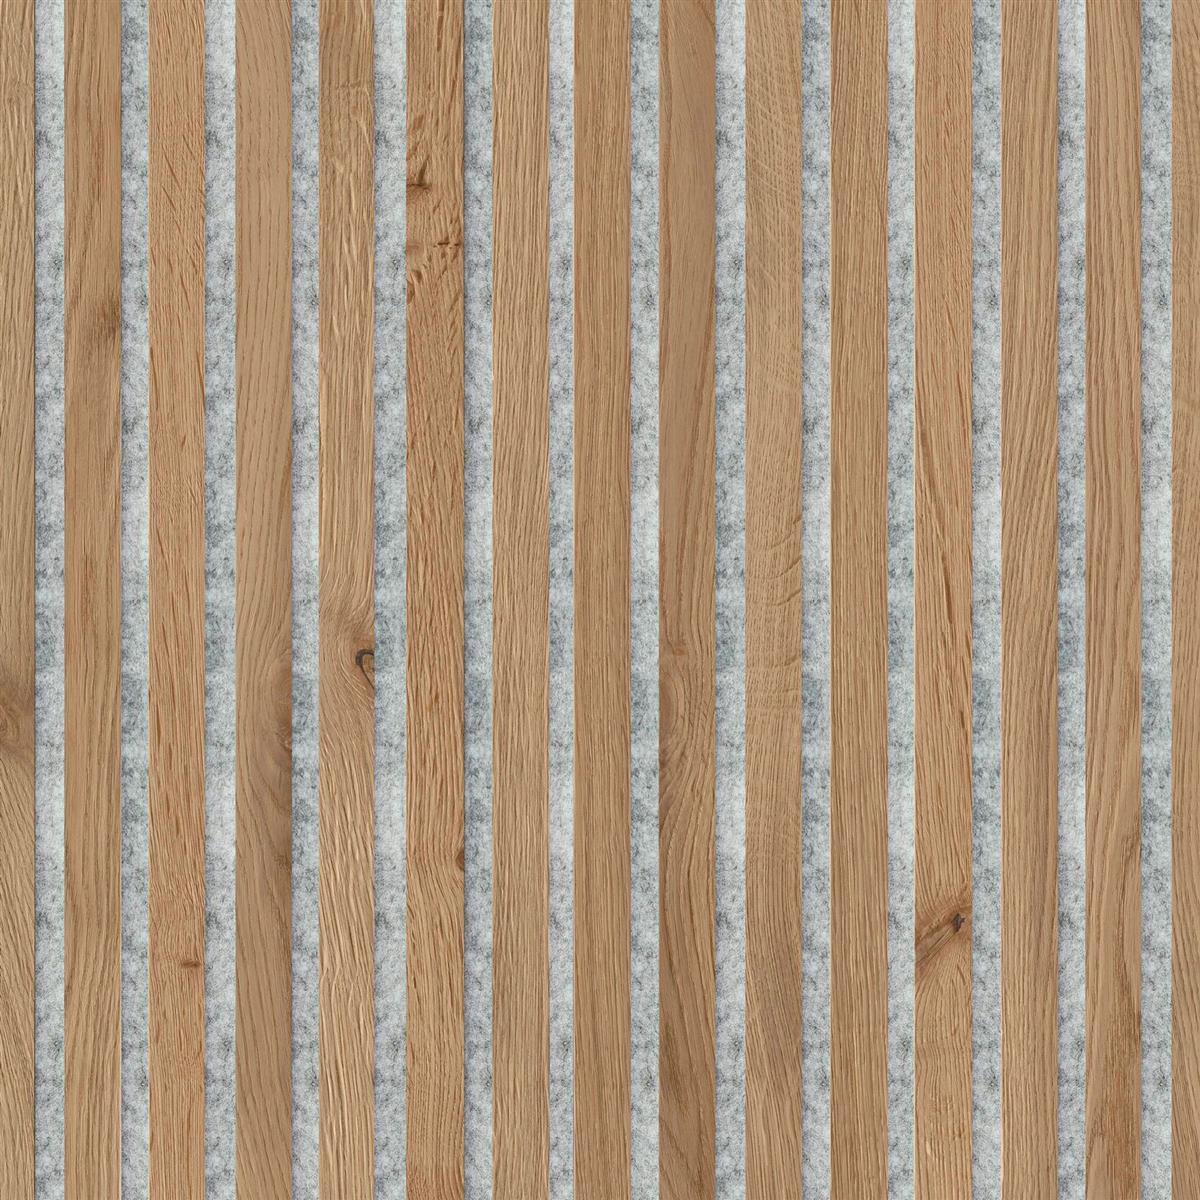 JOKA Paro Akustik Wandpaneele PAG350 240 cm Eiche Rustikal, graues Vlies - geölt Echtholzpaneel